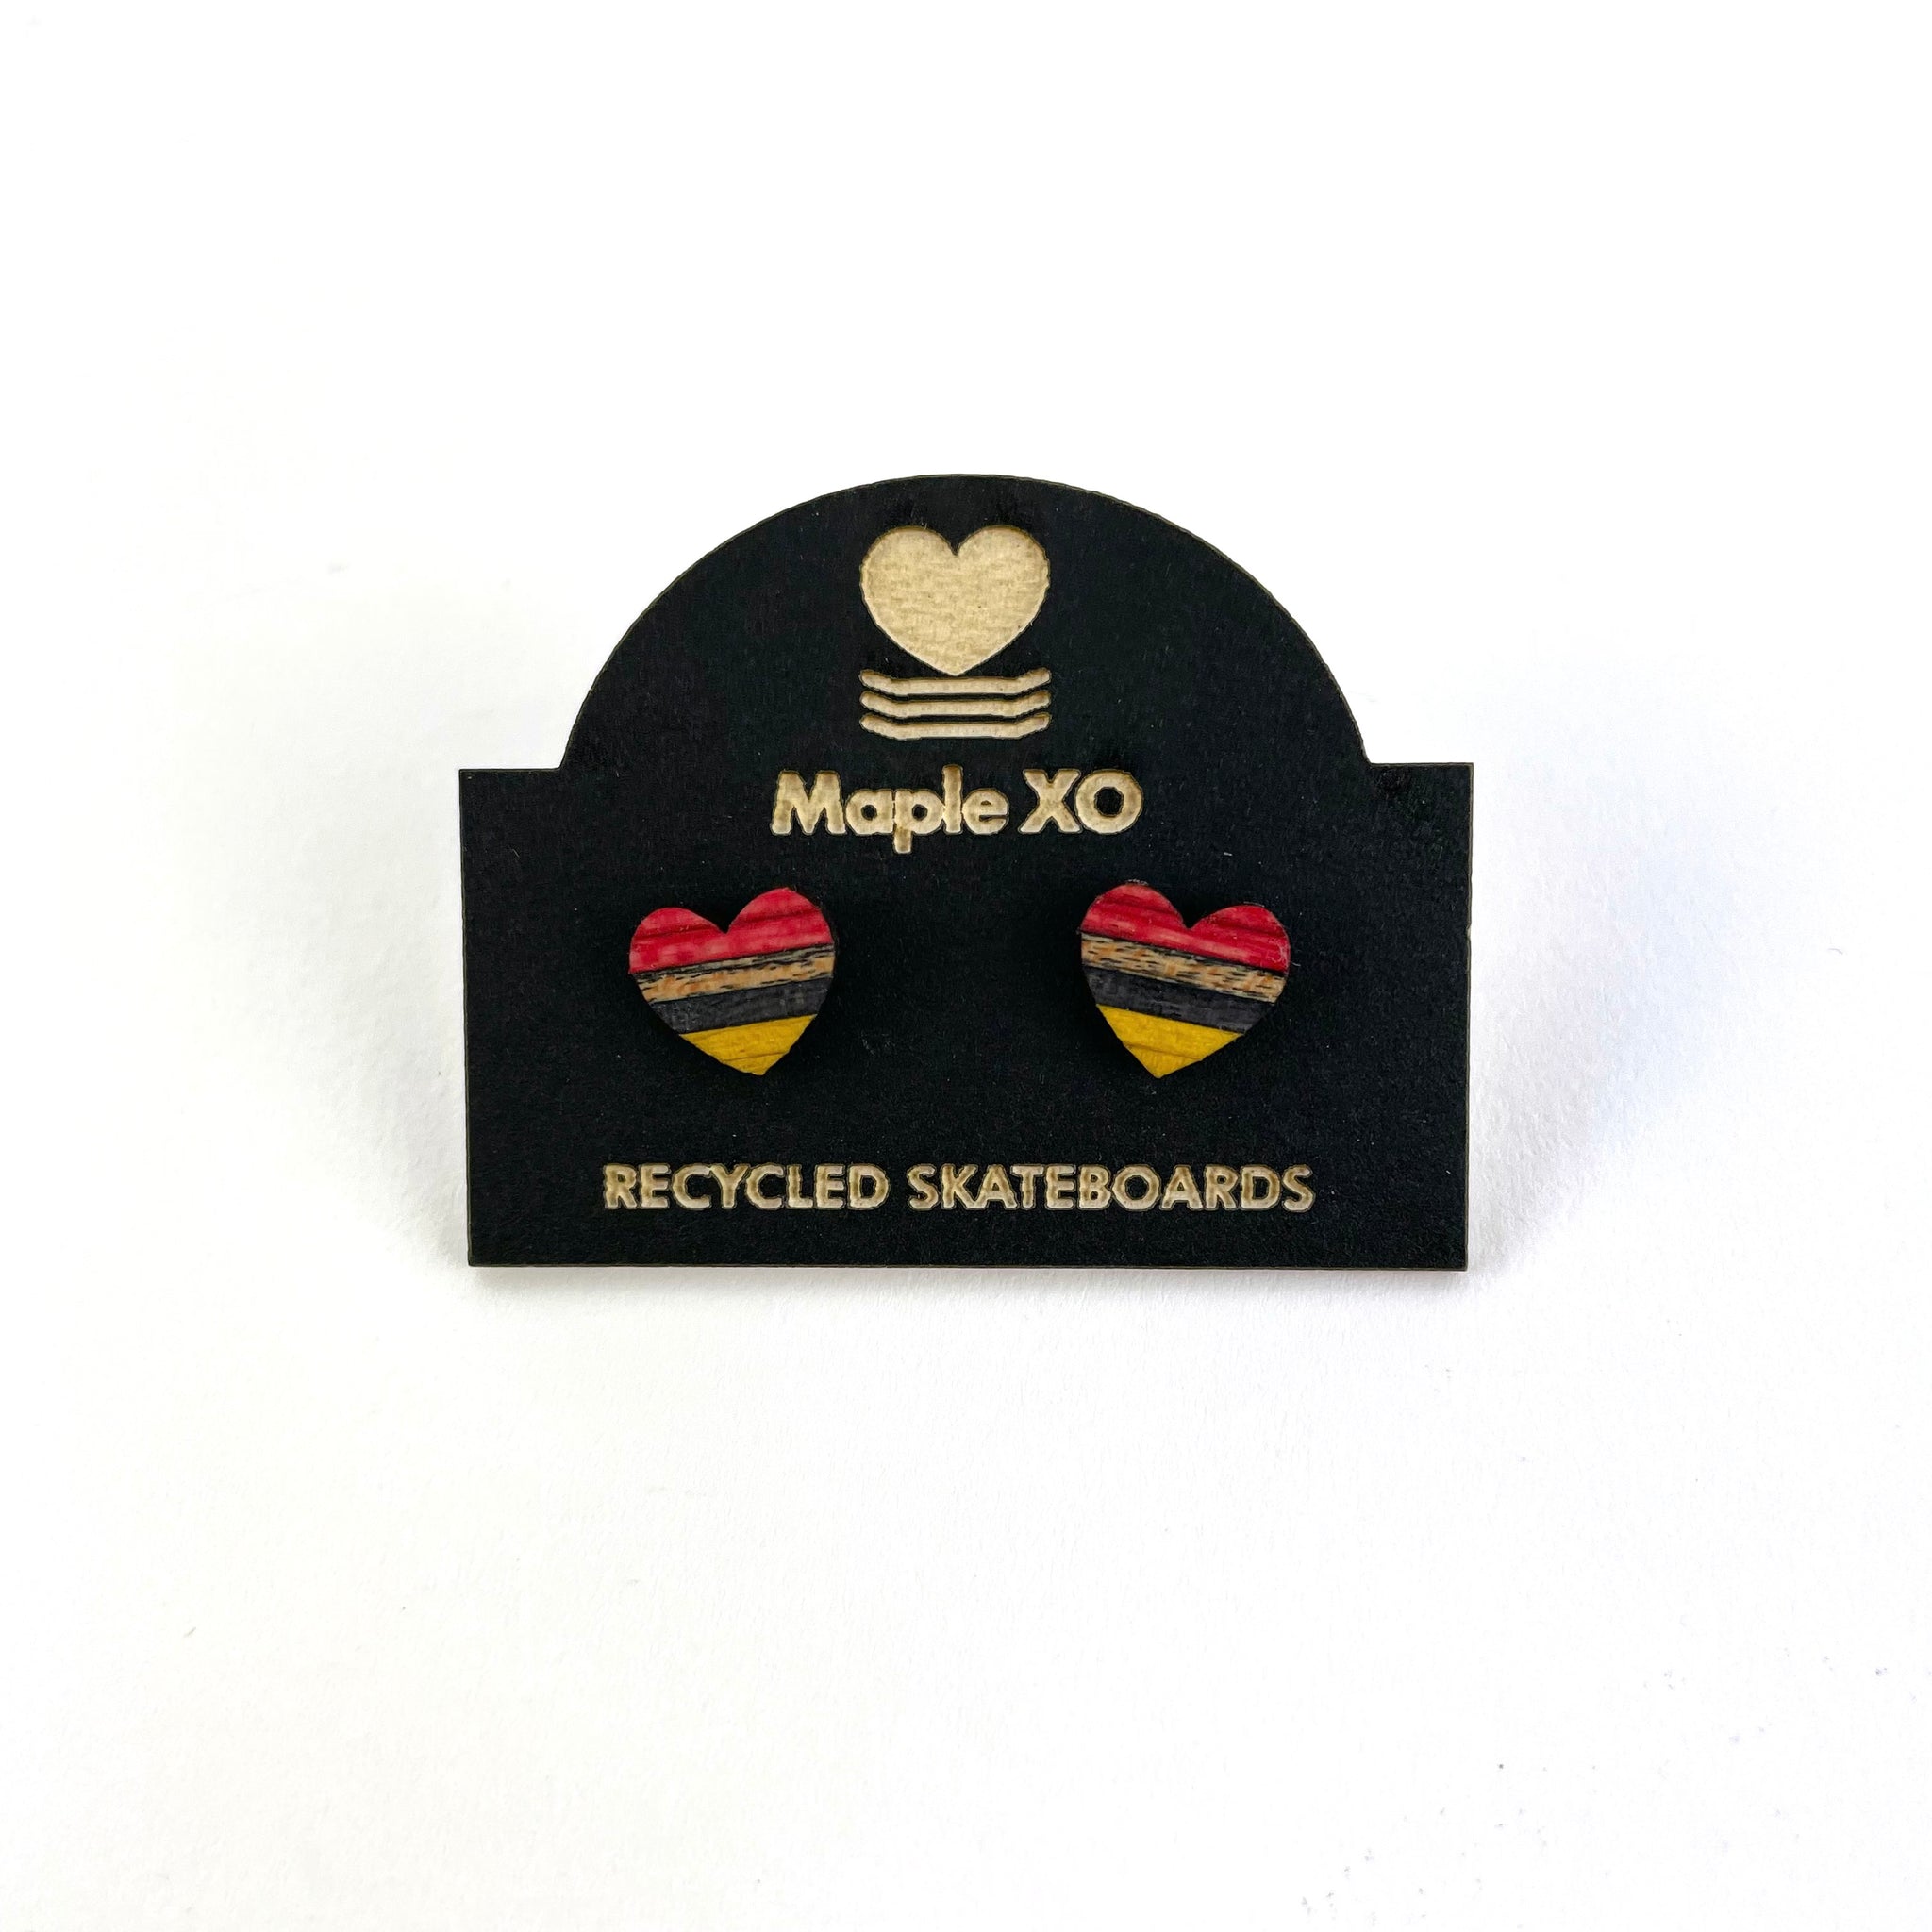 Recycled Stud Earrings by MapleXO